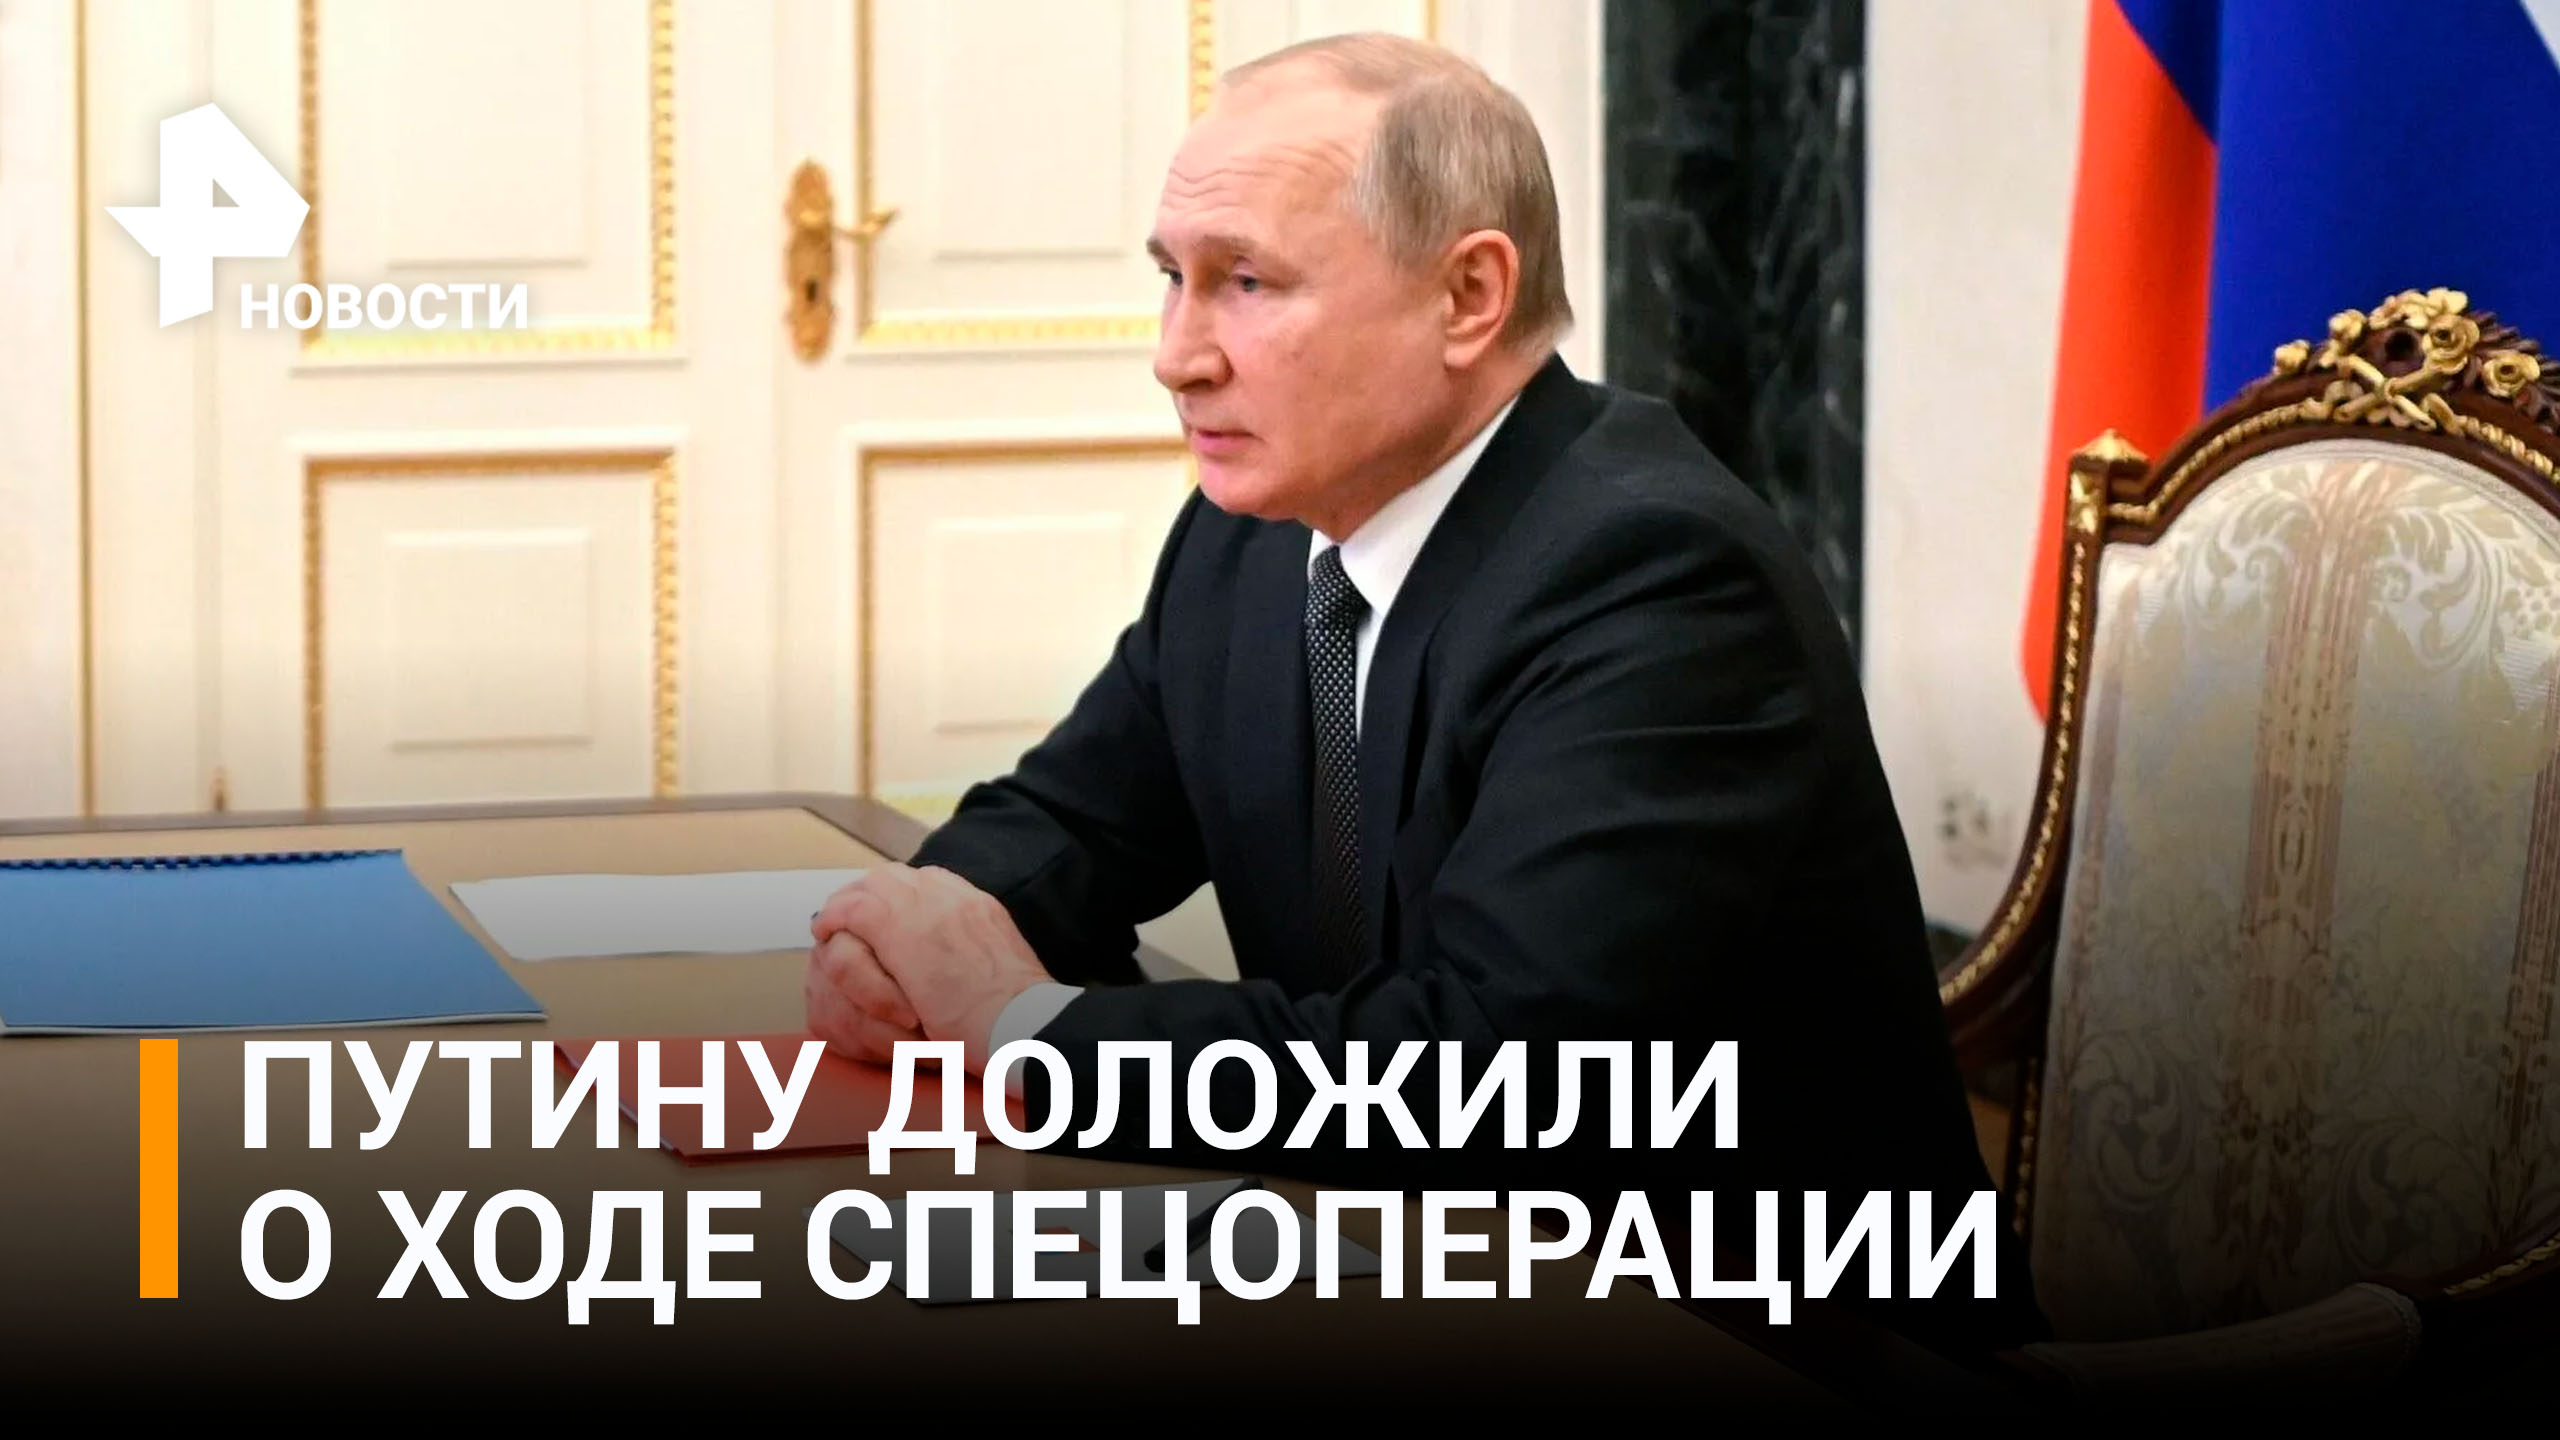 Путин обсудил ход спецоперации с членами Совбеза / РЕН Новости